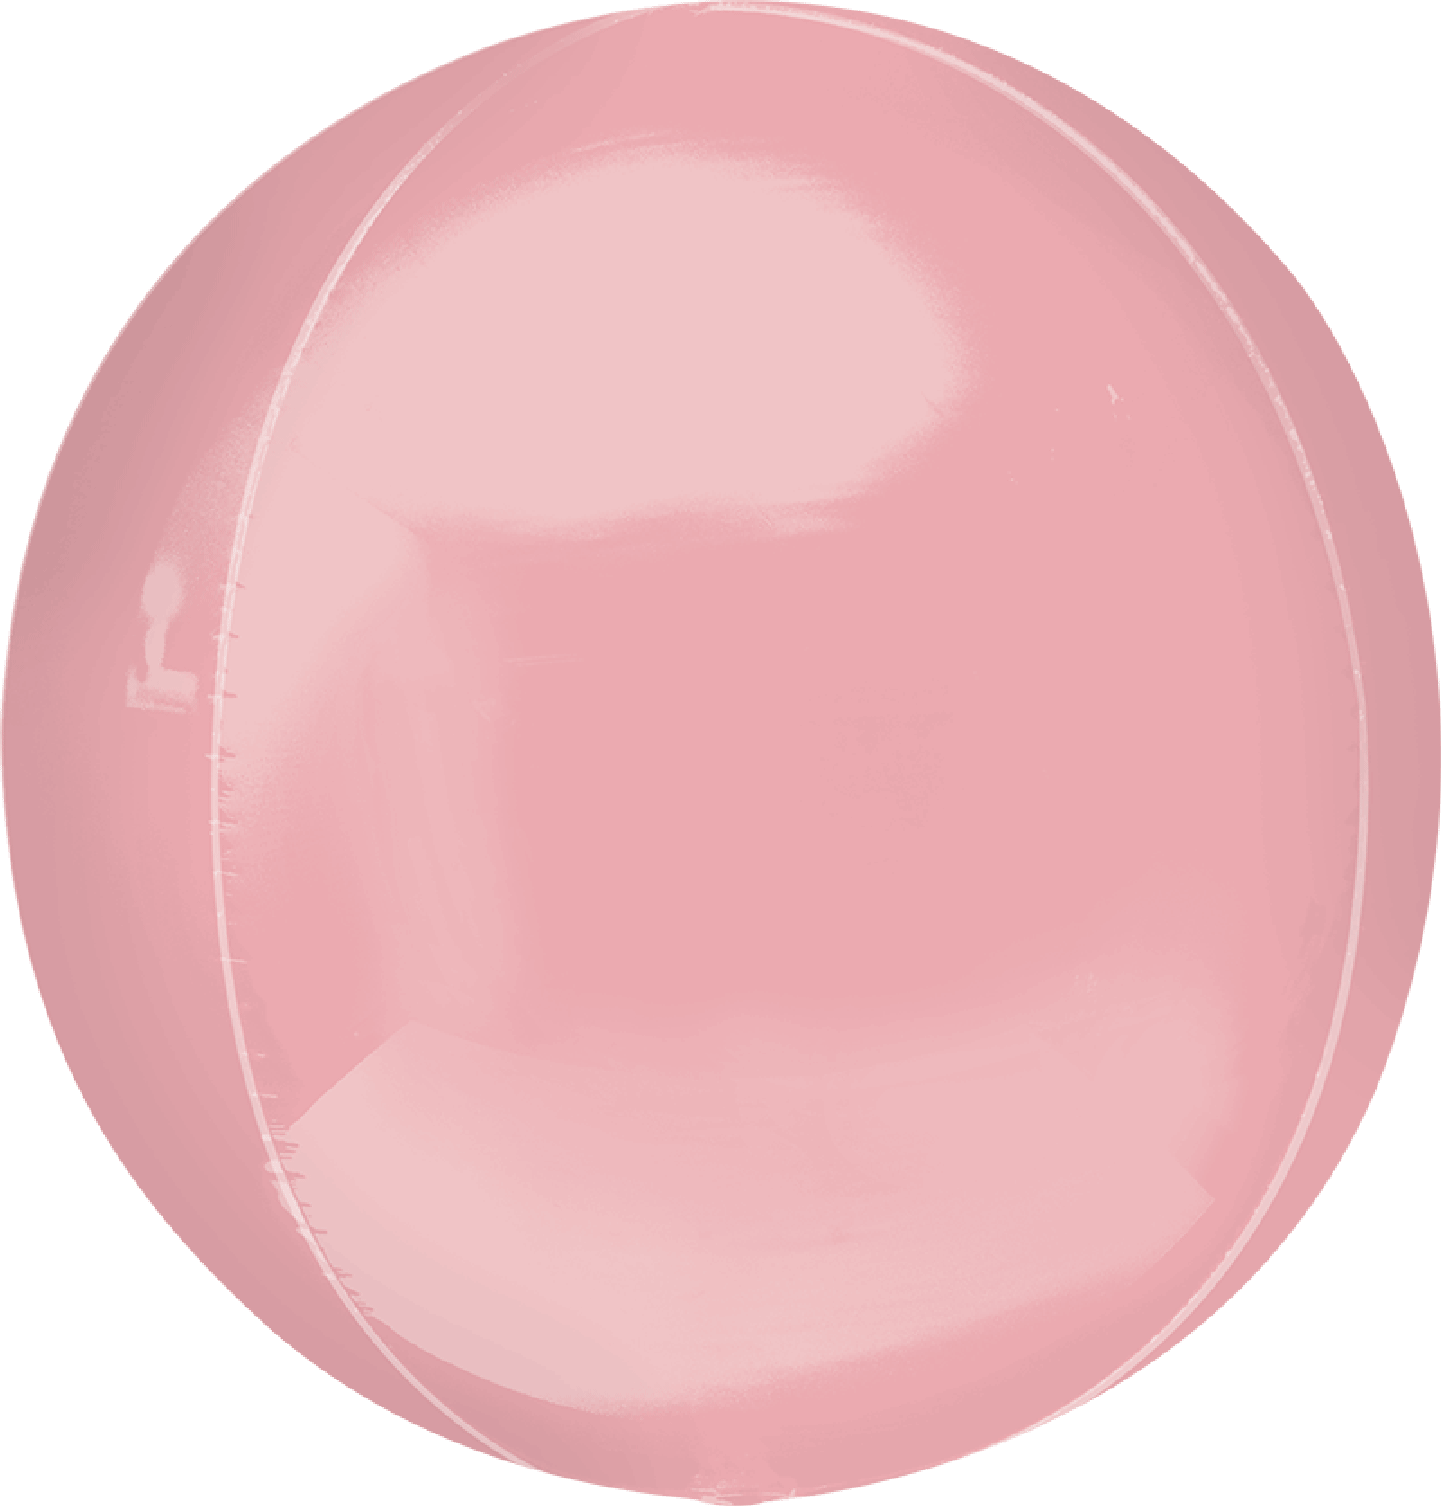  Orbz Jumbo Met Pastel Pink